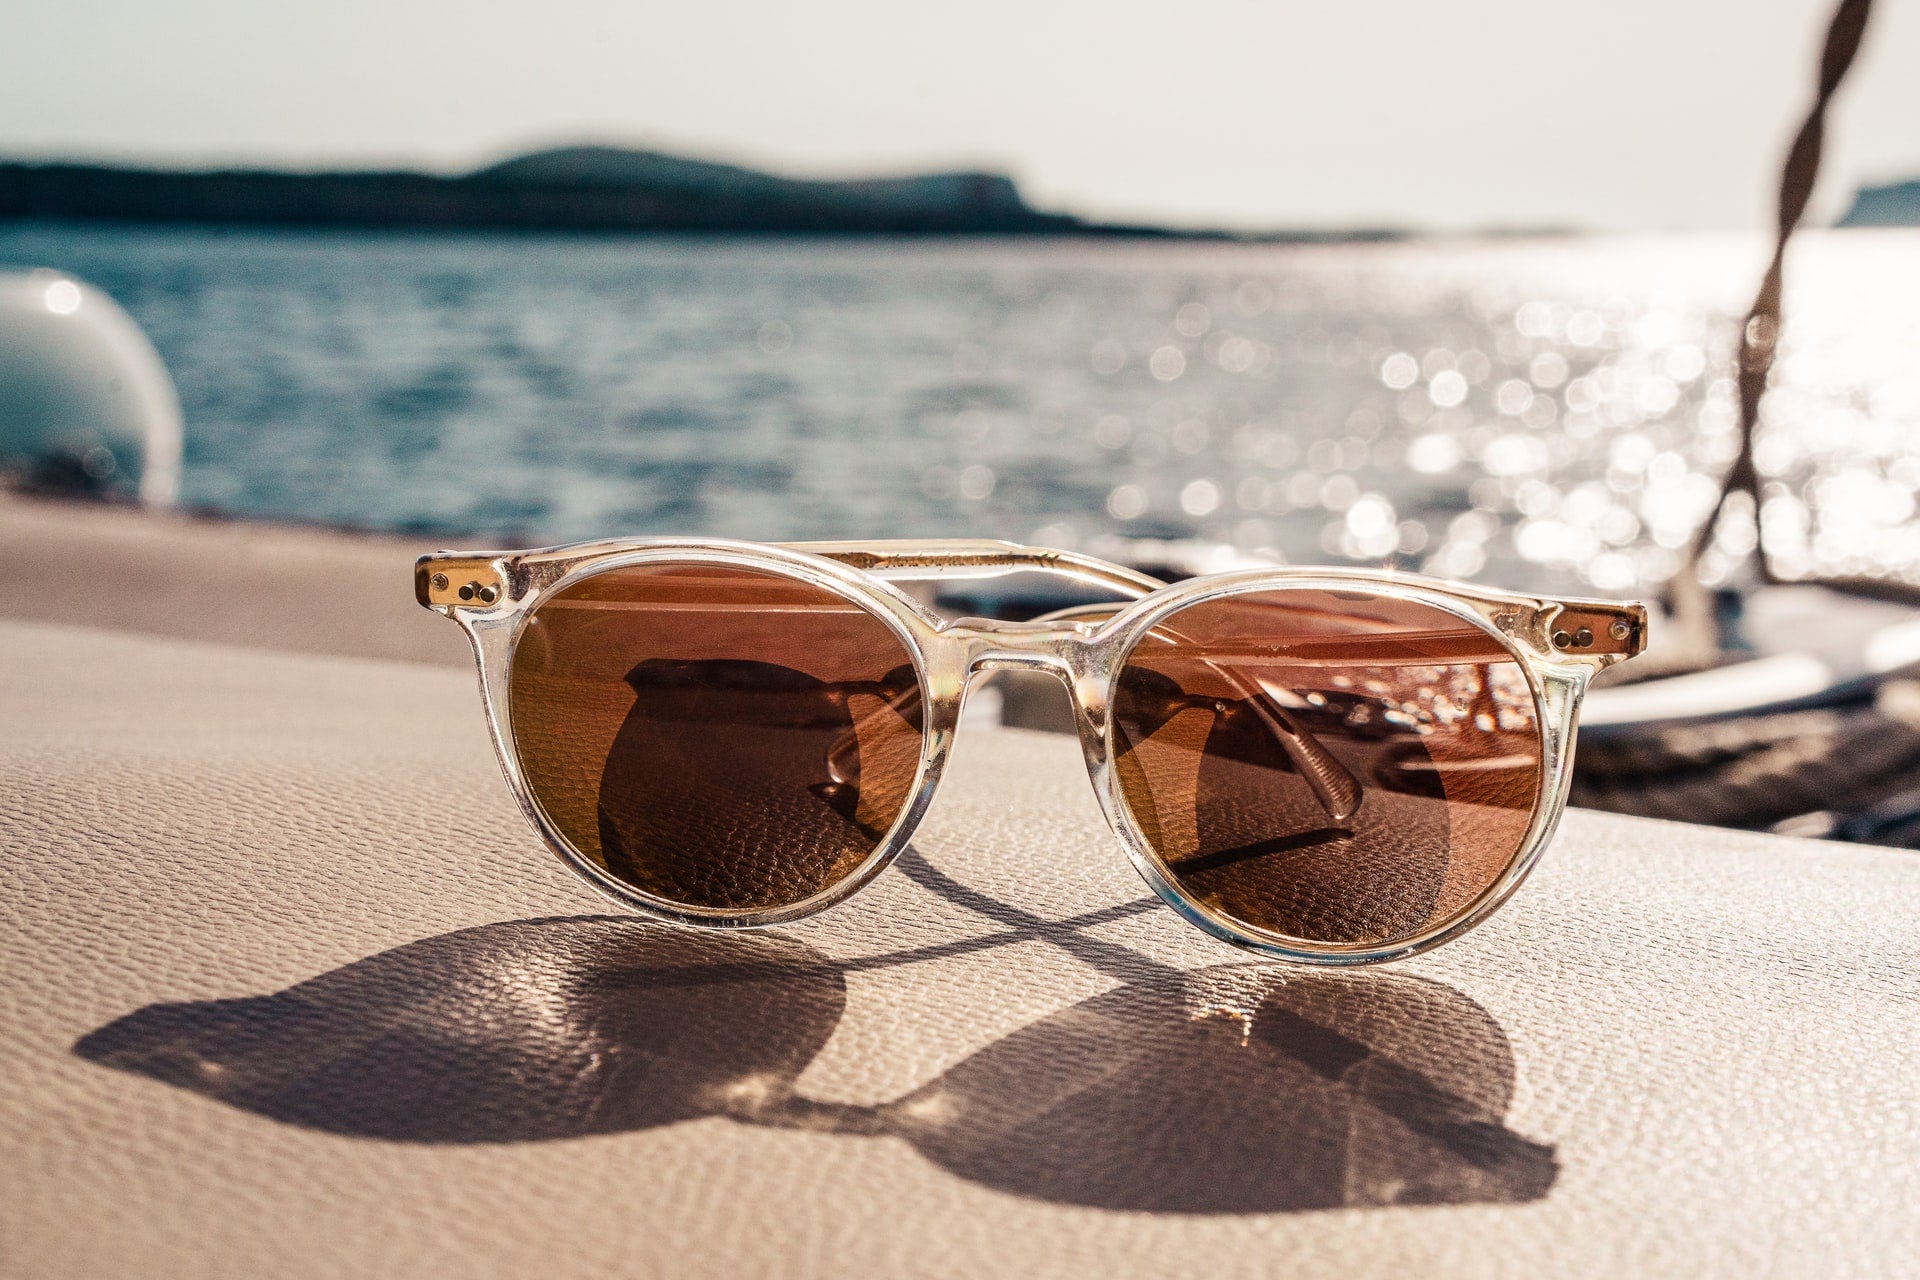 Classy luxurious Sunglasses, Best UV Protected sunglasses